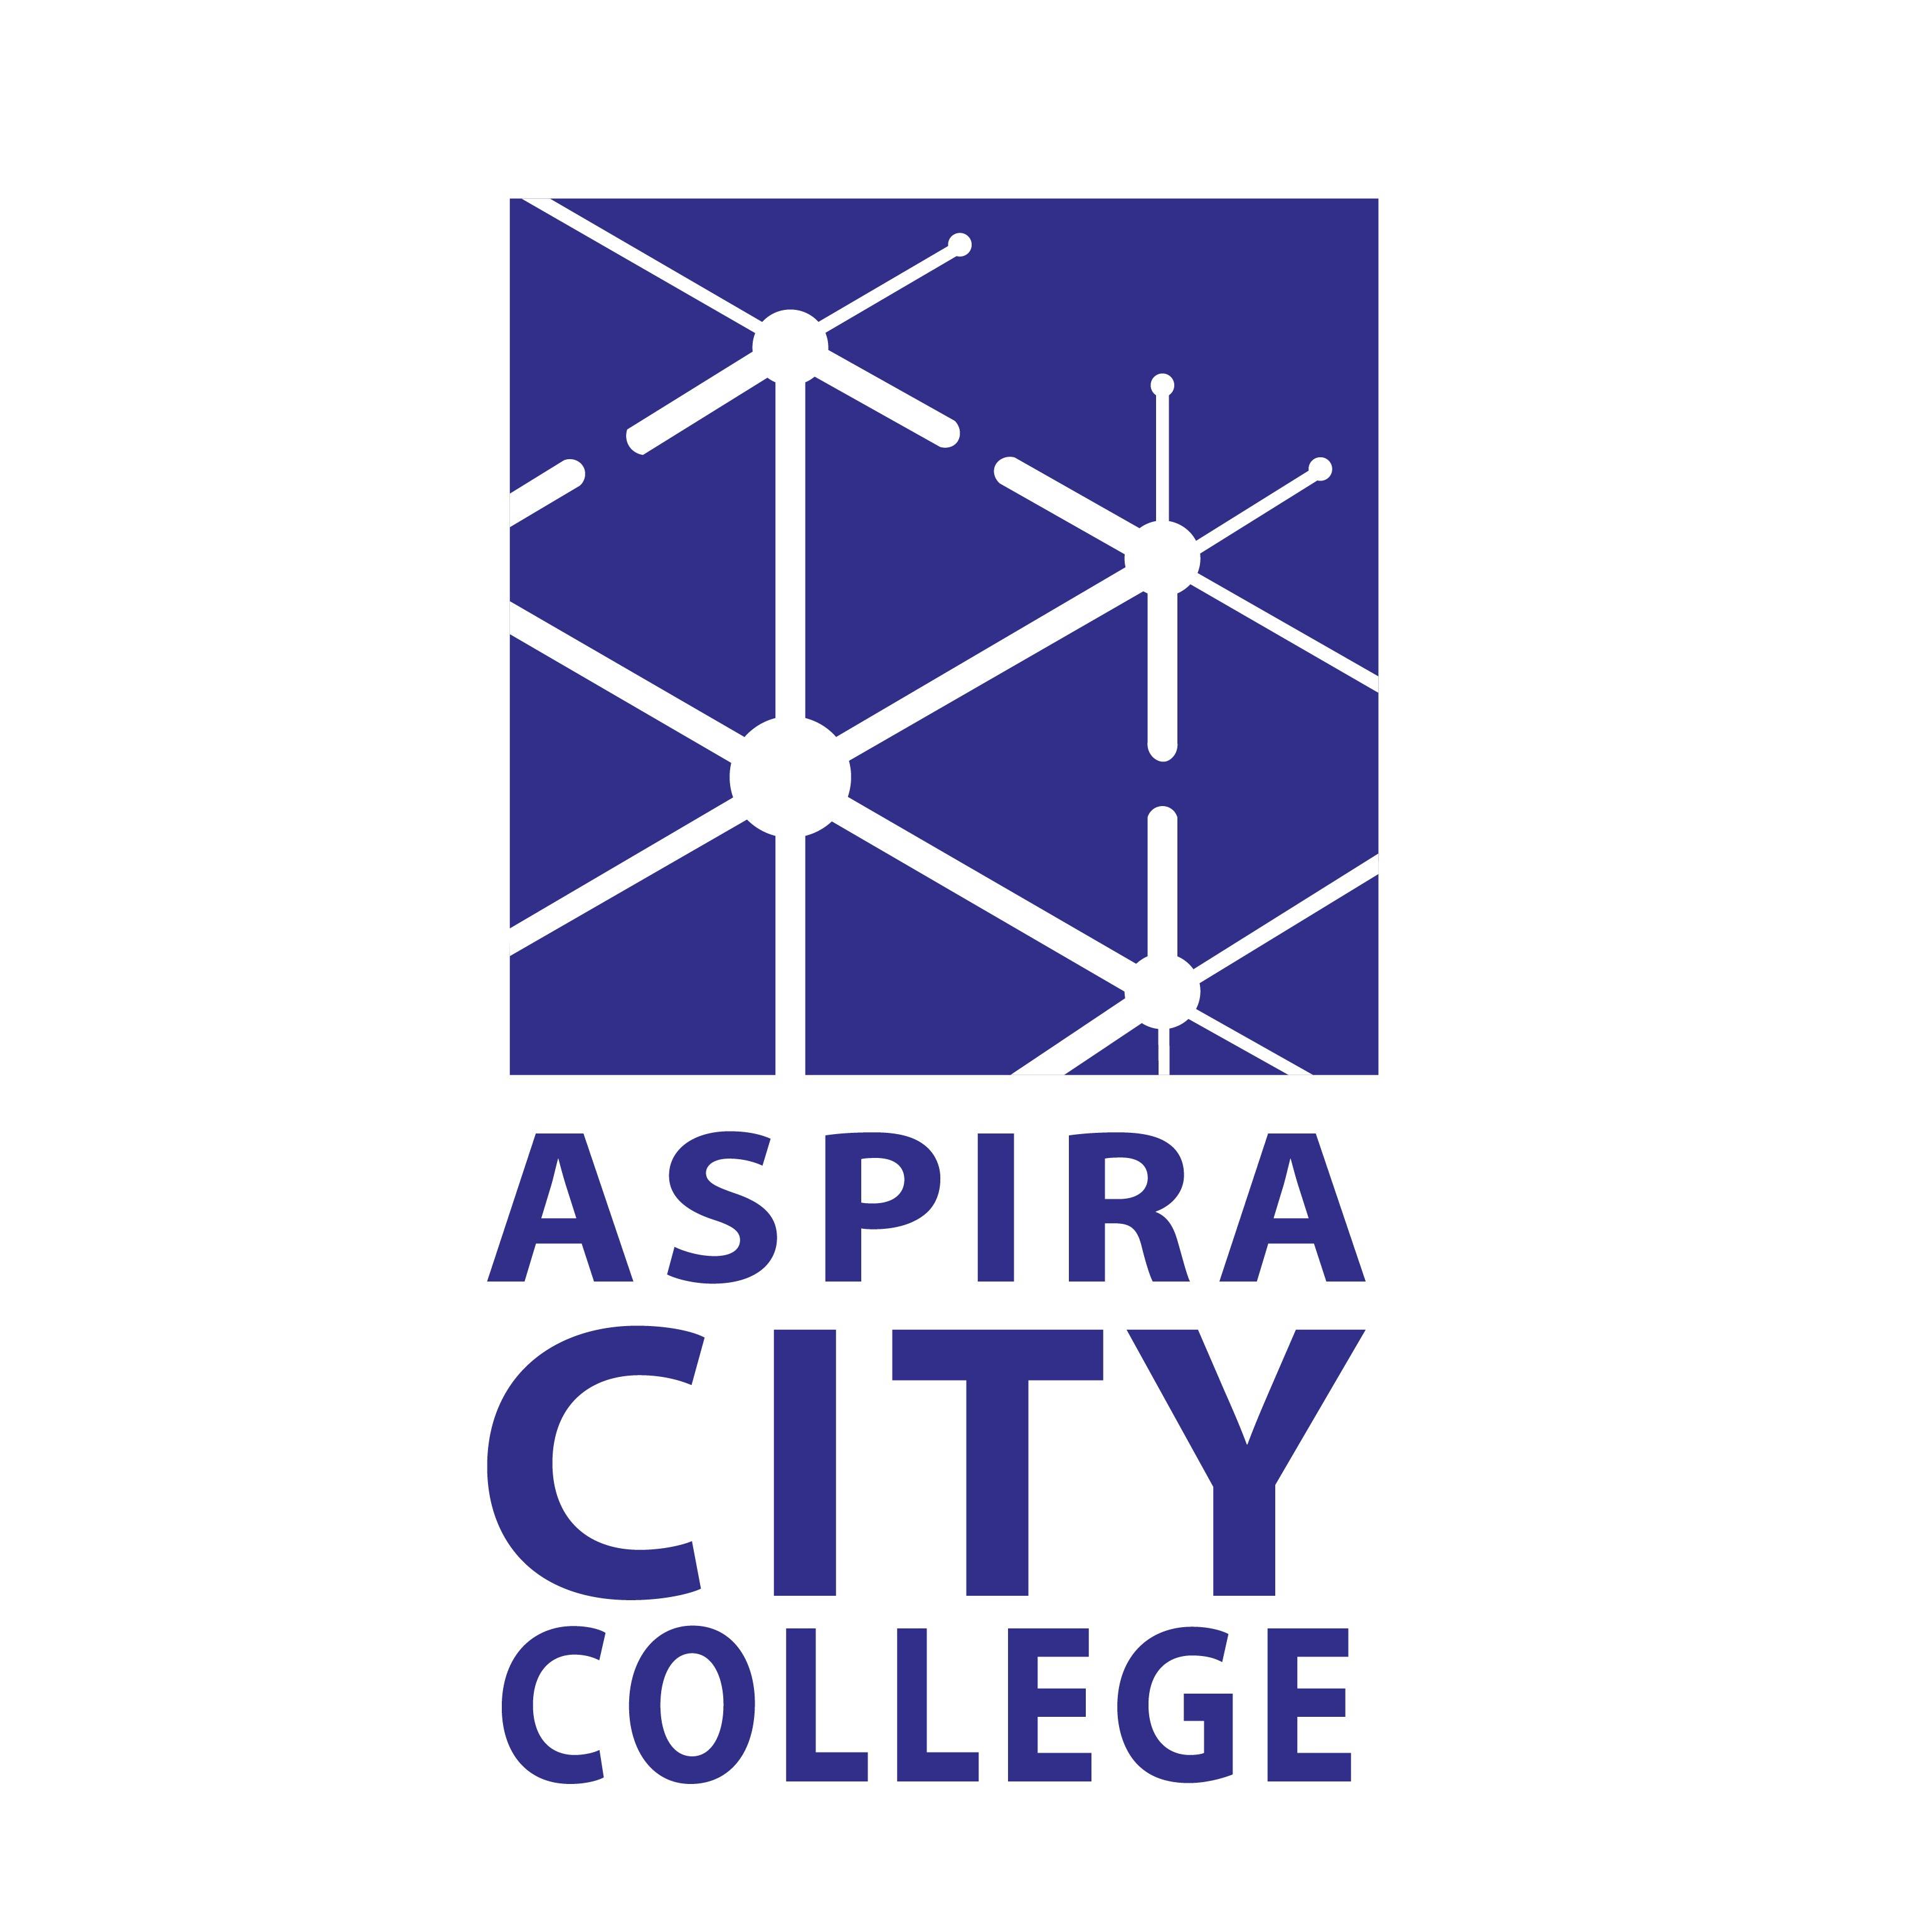 ASPIRA City College 4322 N 5th St Philadelphia PA 19140 United